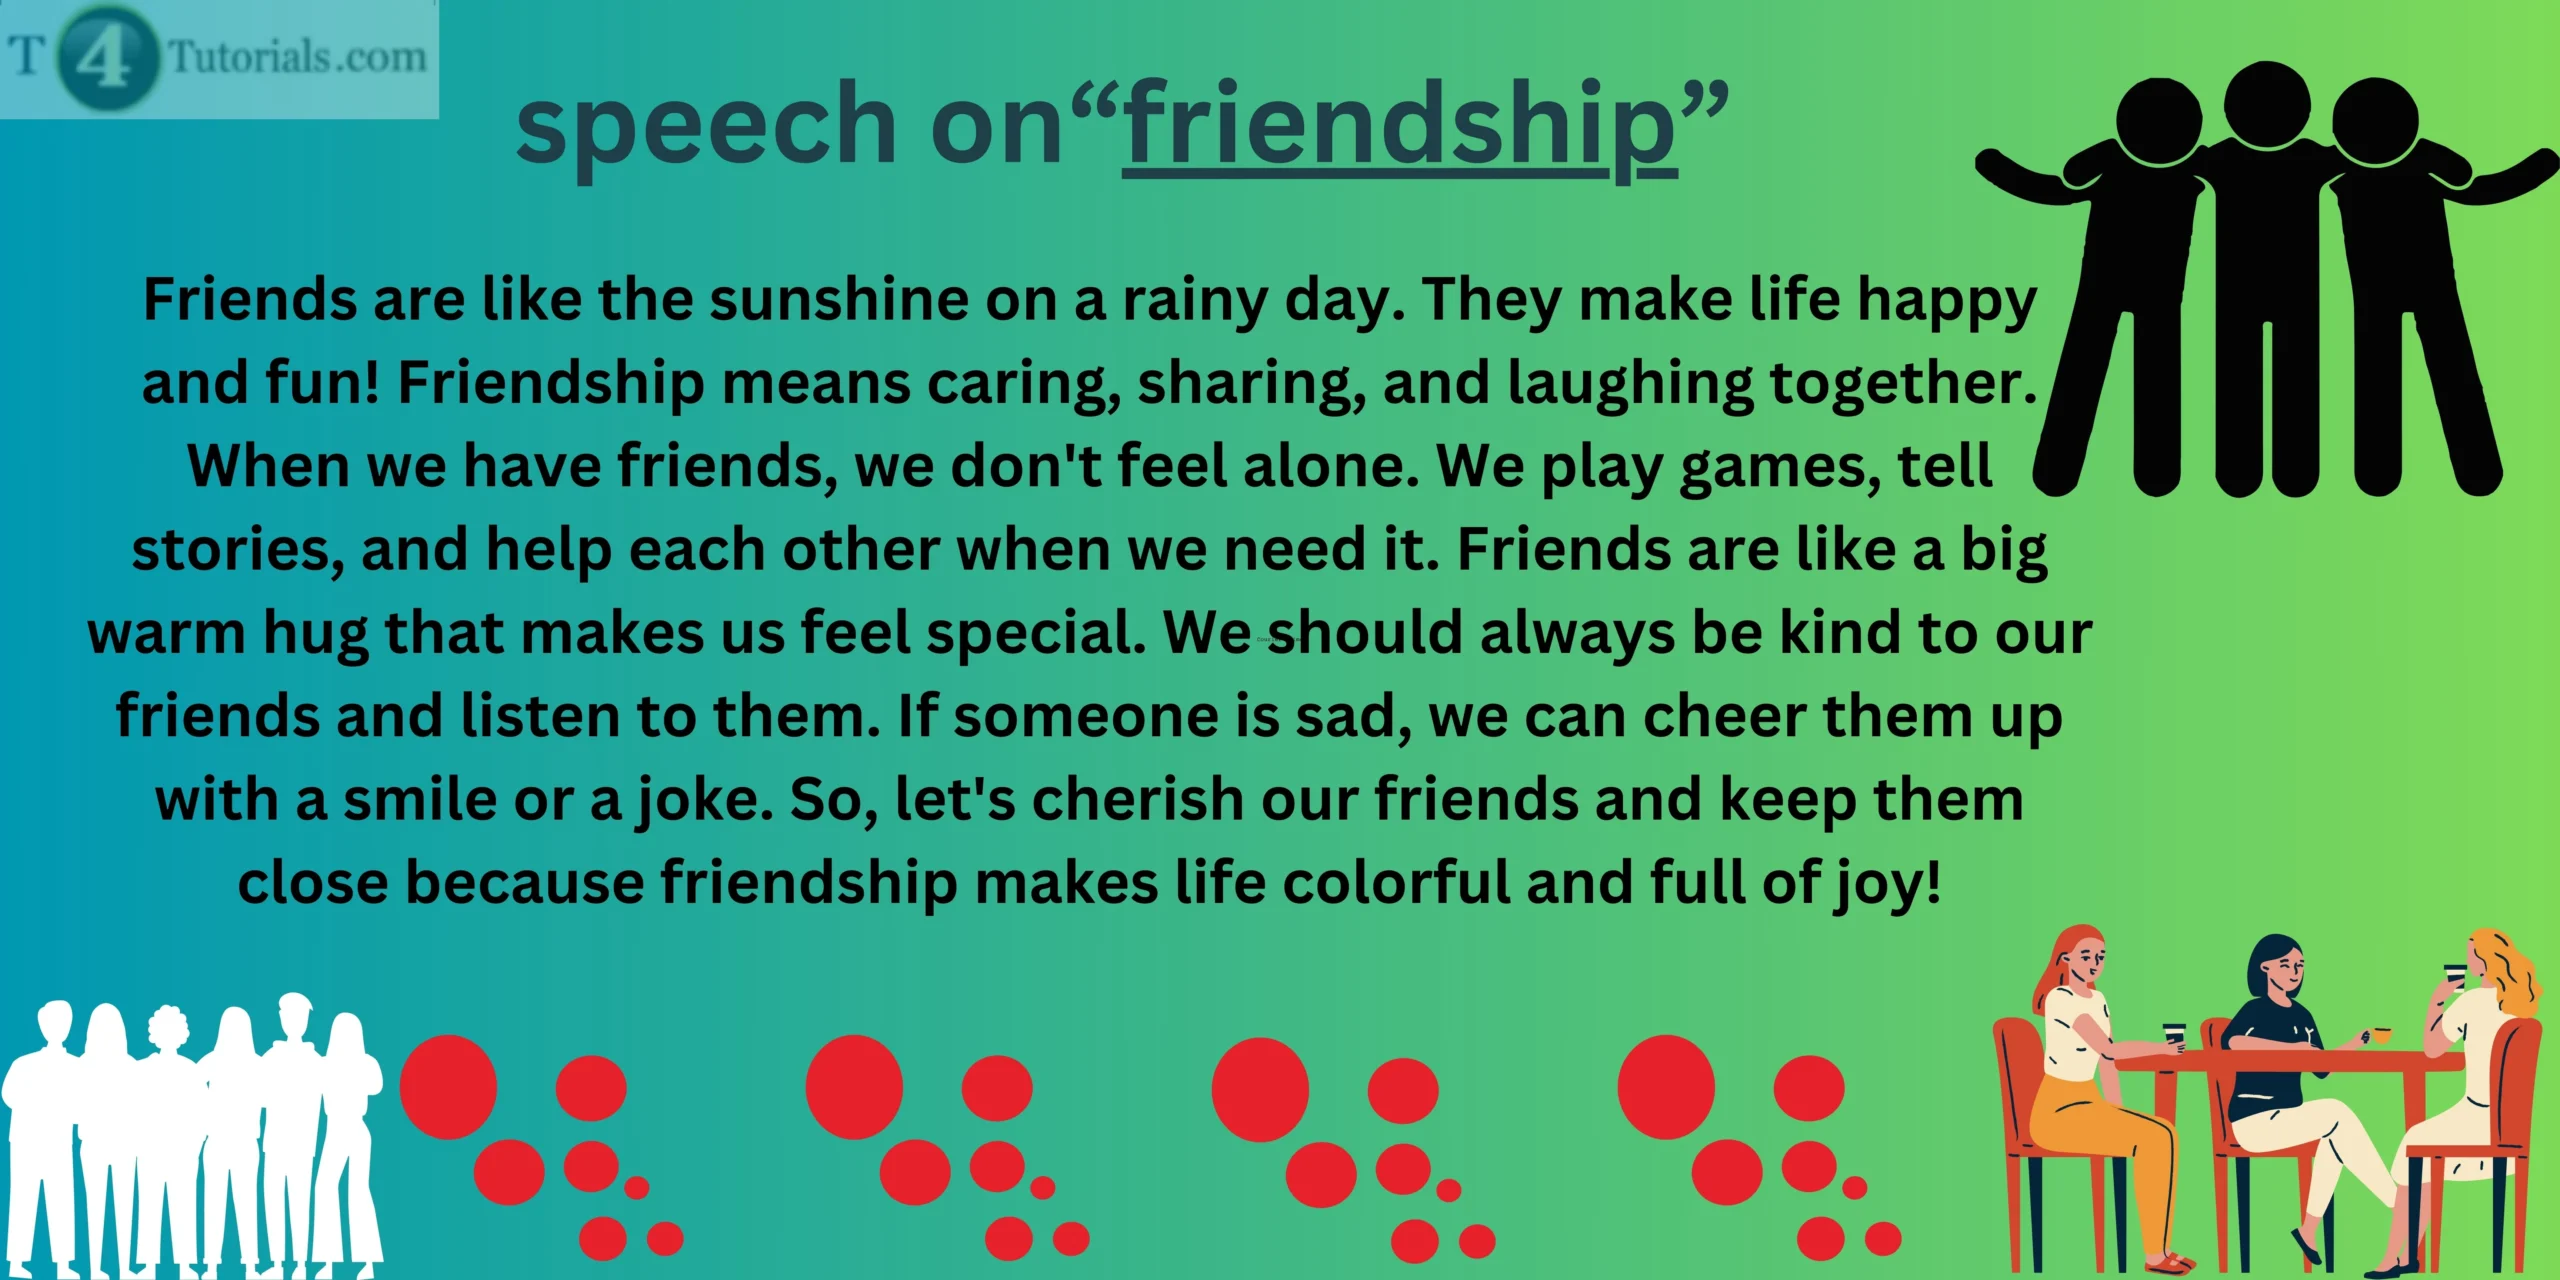 speech on Friend ship